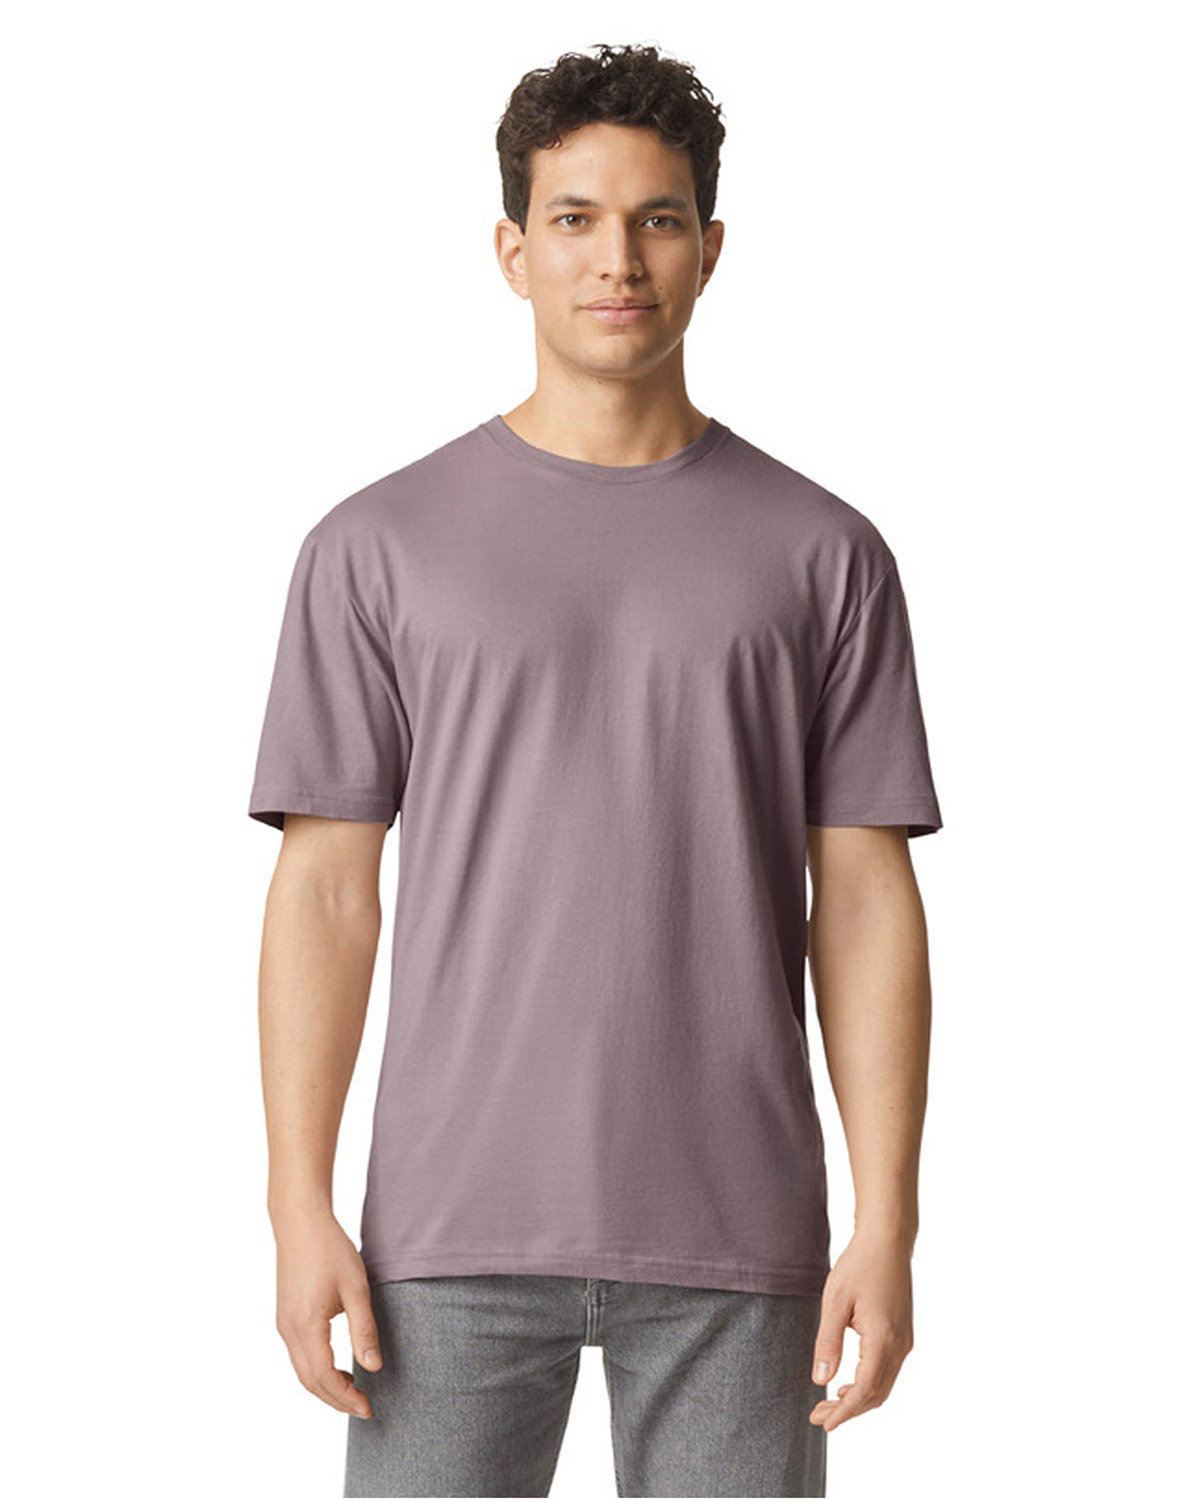 https://images.shirtspace.com/fullsize/v8P2T0ZjZcEhZnps2pvZbg%3D%3D/458291/1257-gildan-g640-adult-softstyle-t-shirt-front-paragon.jpg